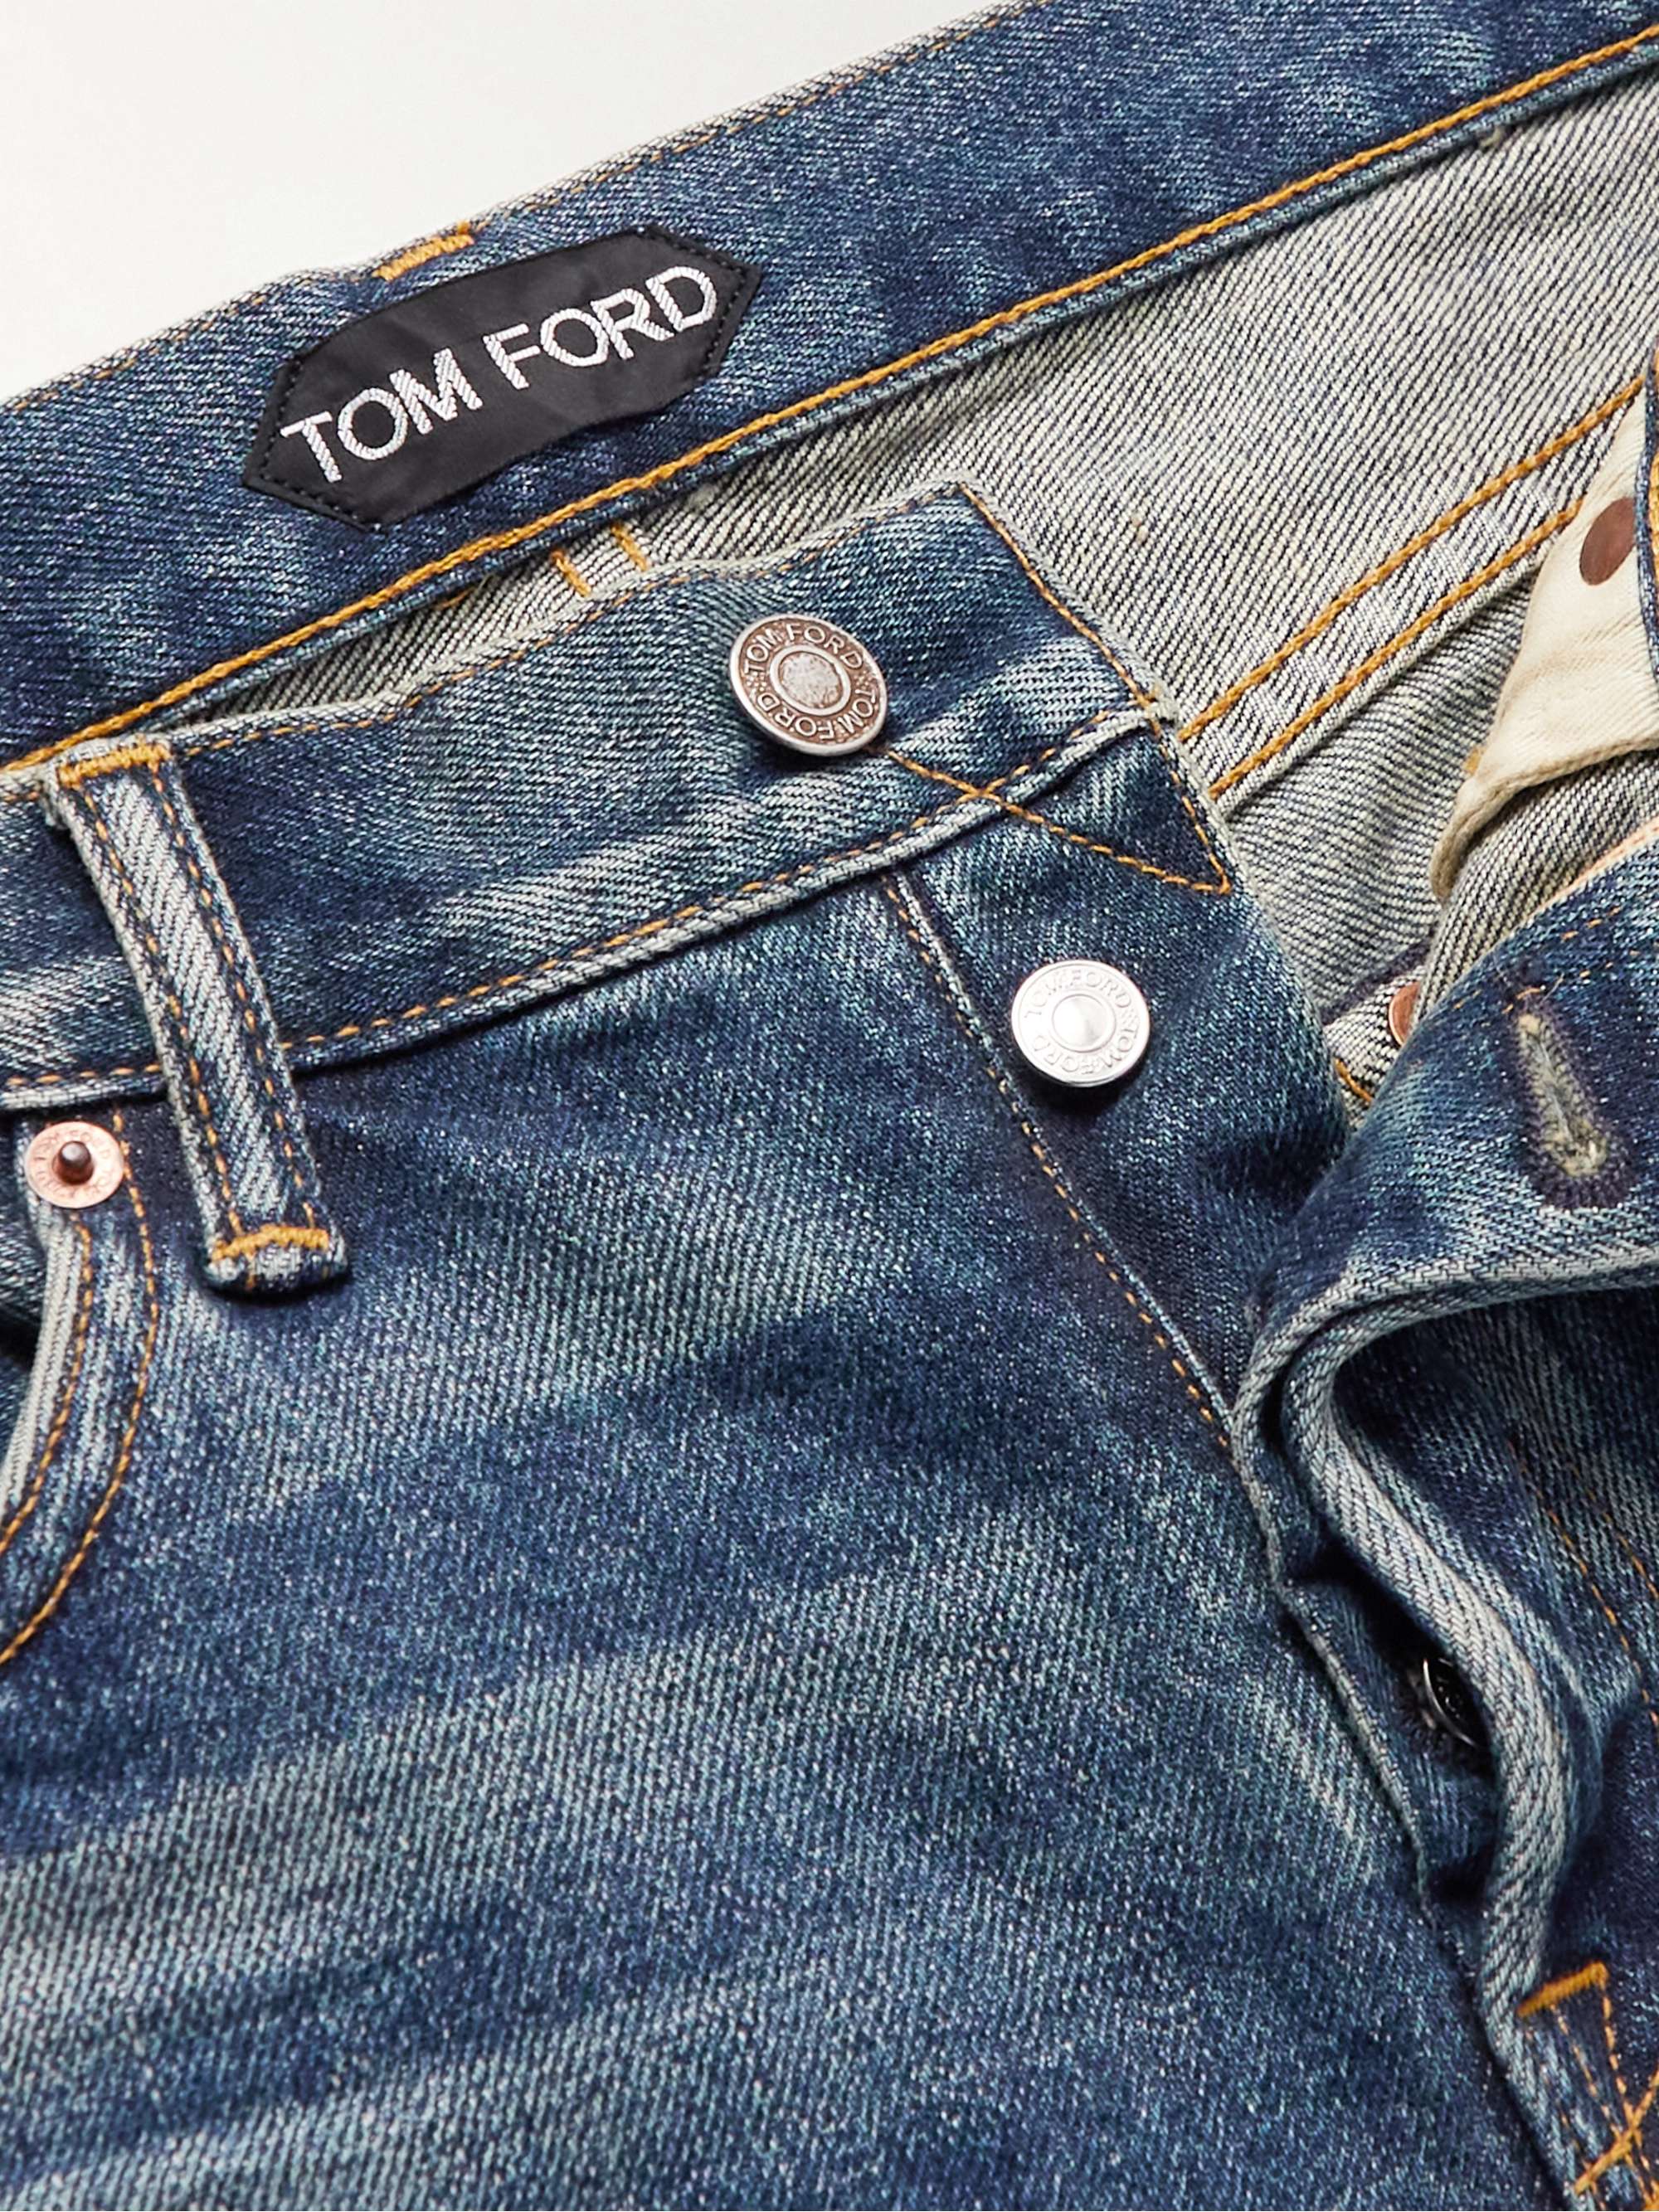 TOM FORD Slim-Fit Selvedge Jeans